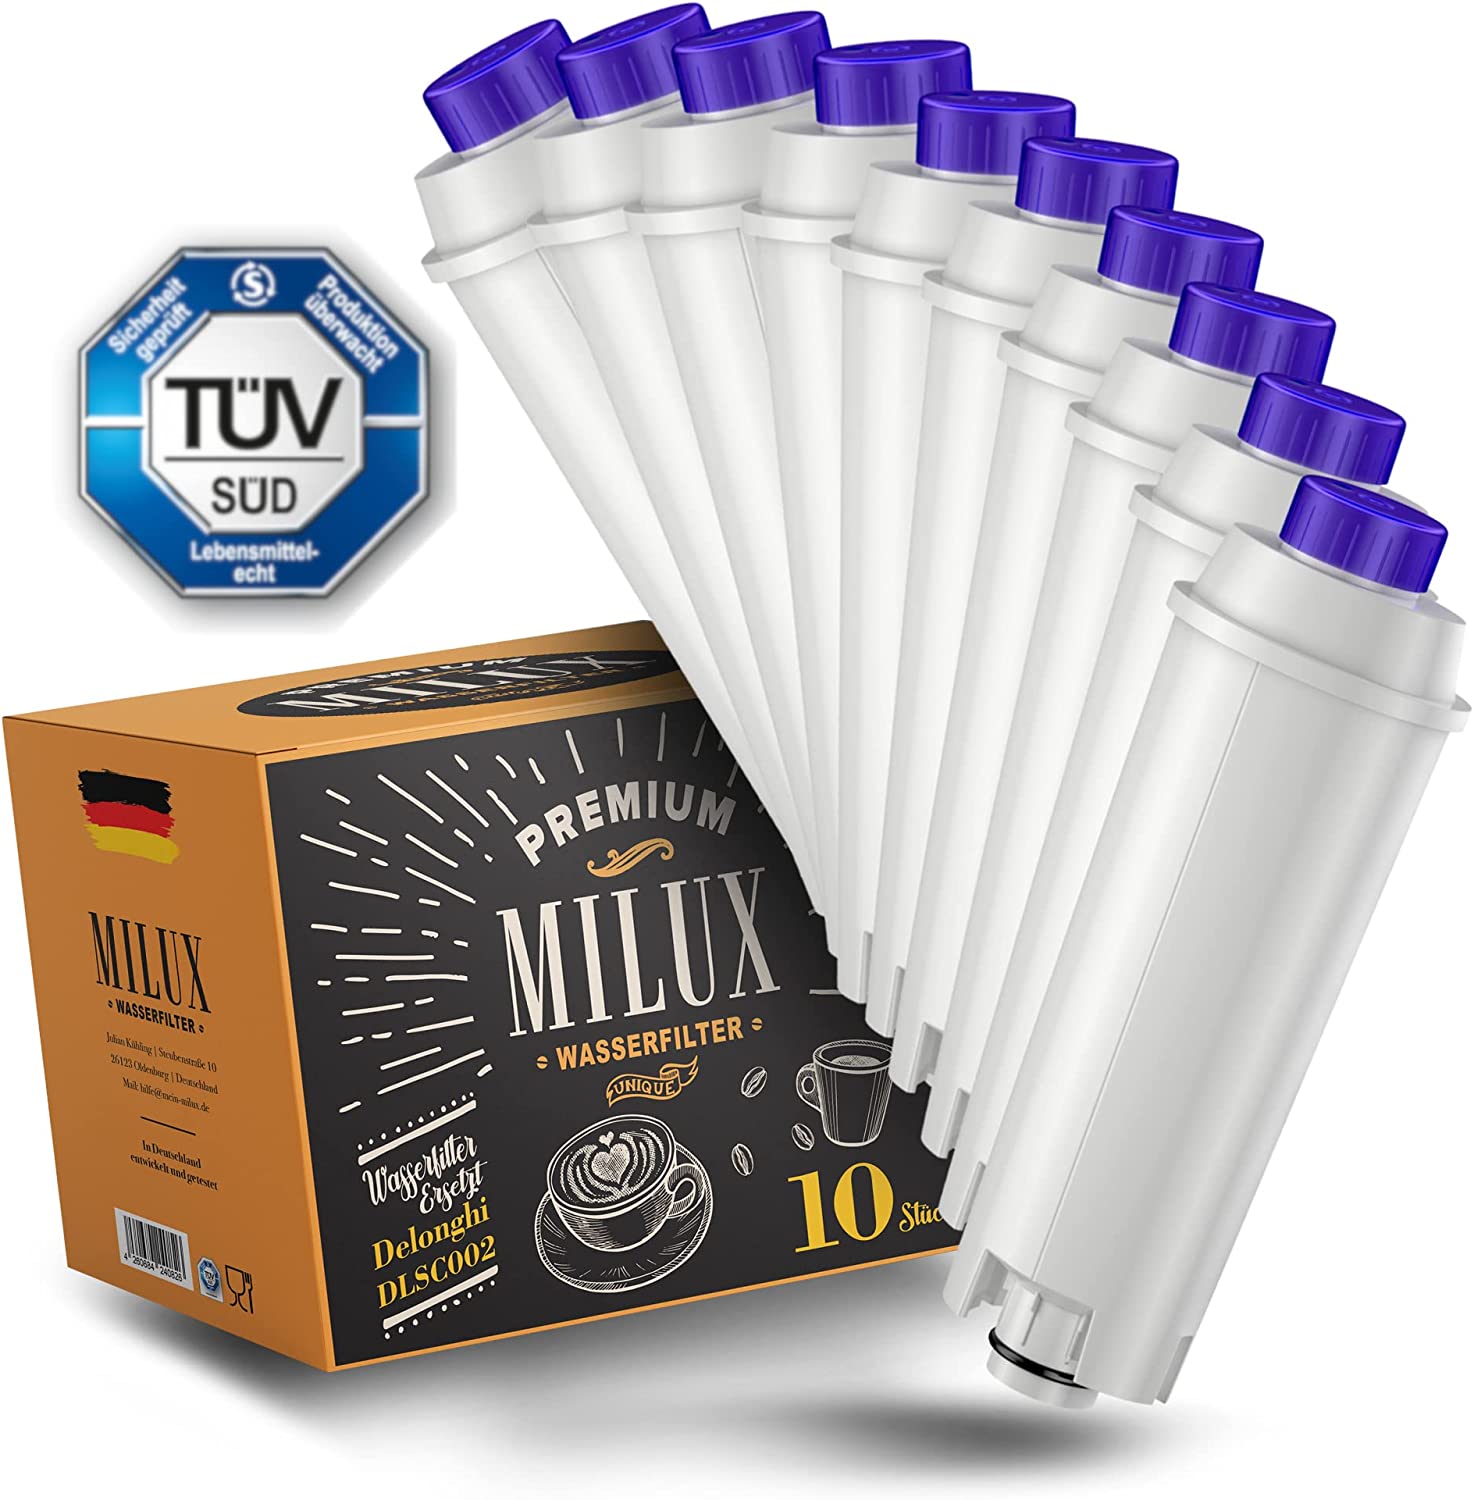 Milux [10x] Water Filter for Delonghi DLSC002 | TÜV Certified | for DLSC002, SER3017 & 5513292811 - Includes Versions of the ECAM, ESAM, ETAM Series